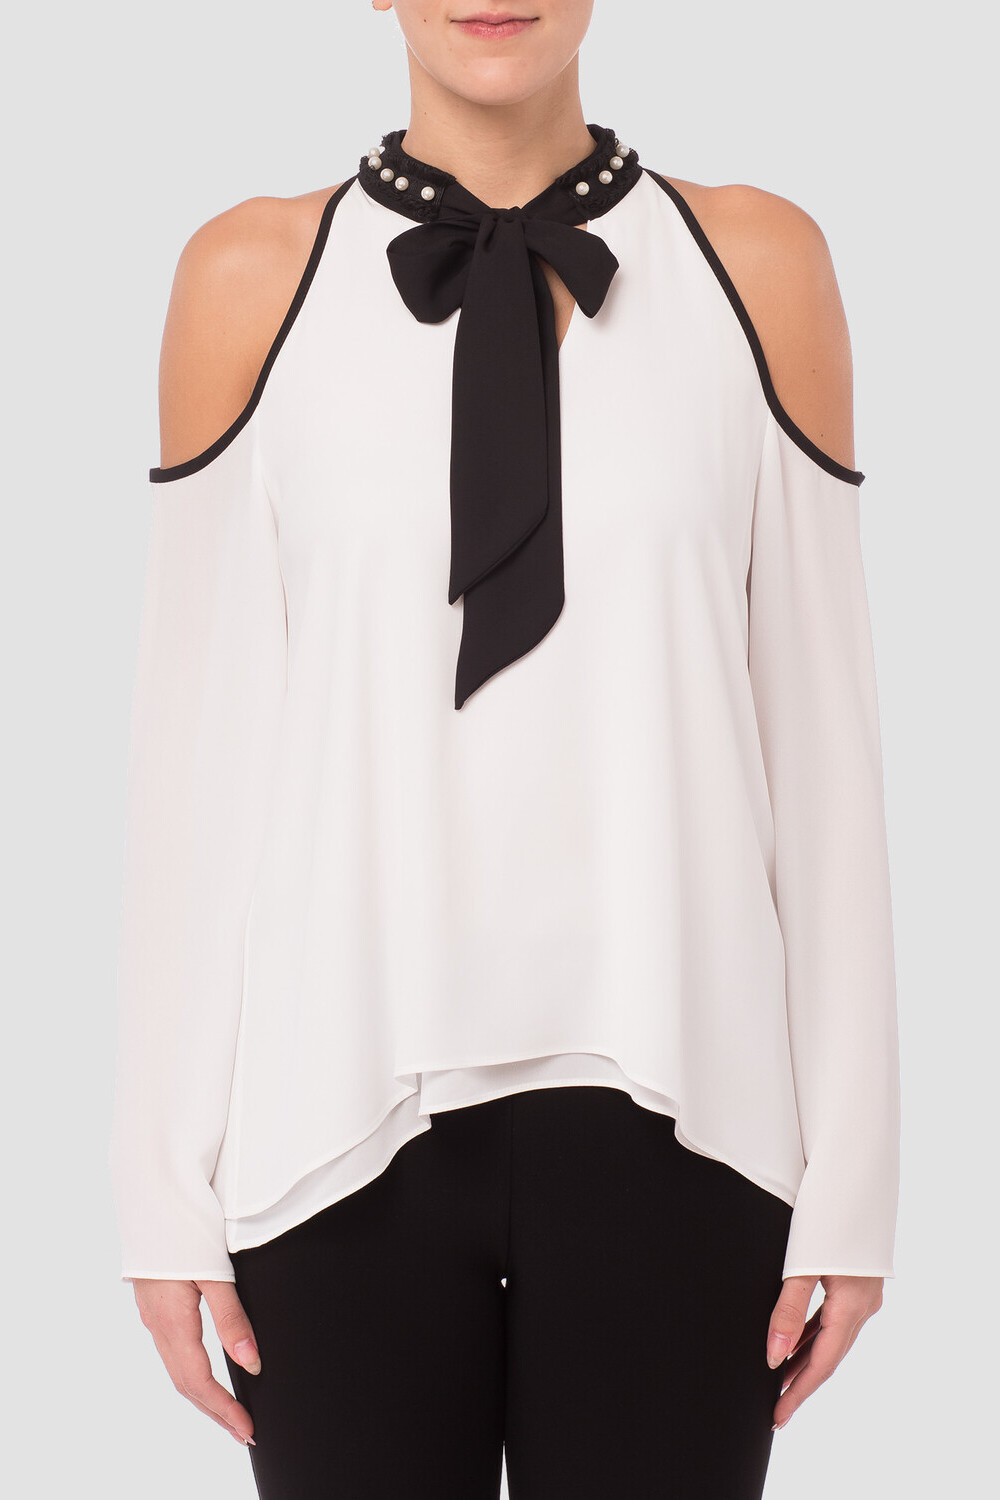 Joseph Ribkoff blouse style 181295. Off White/black